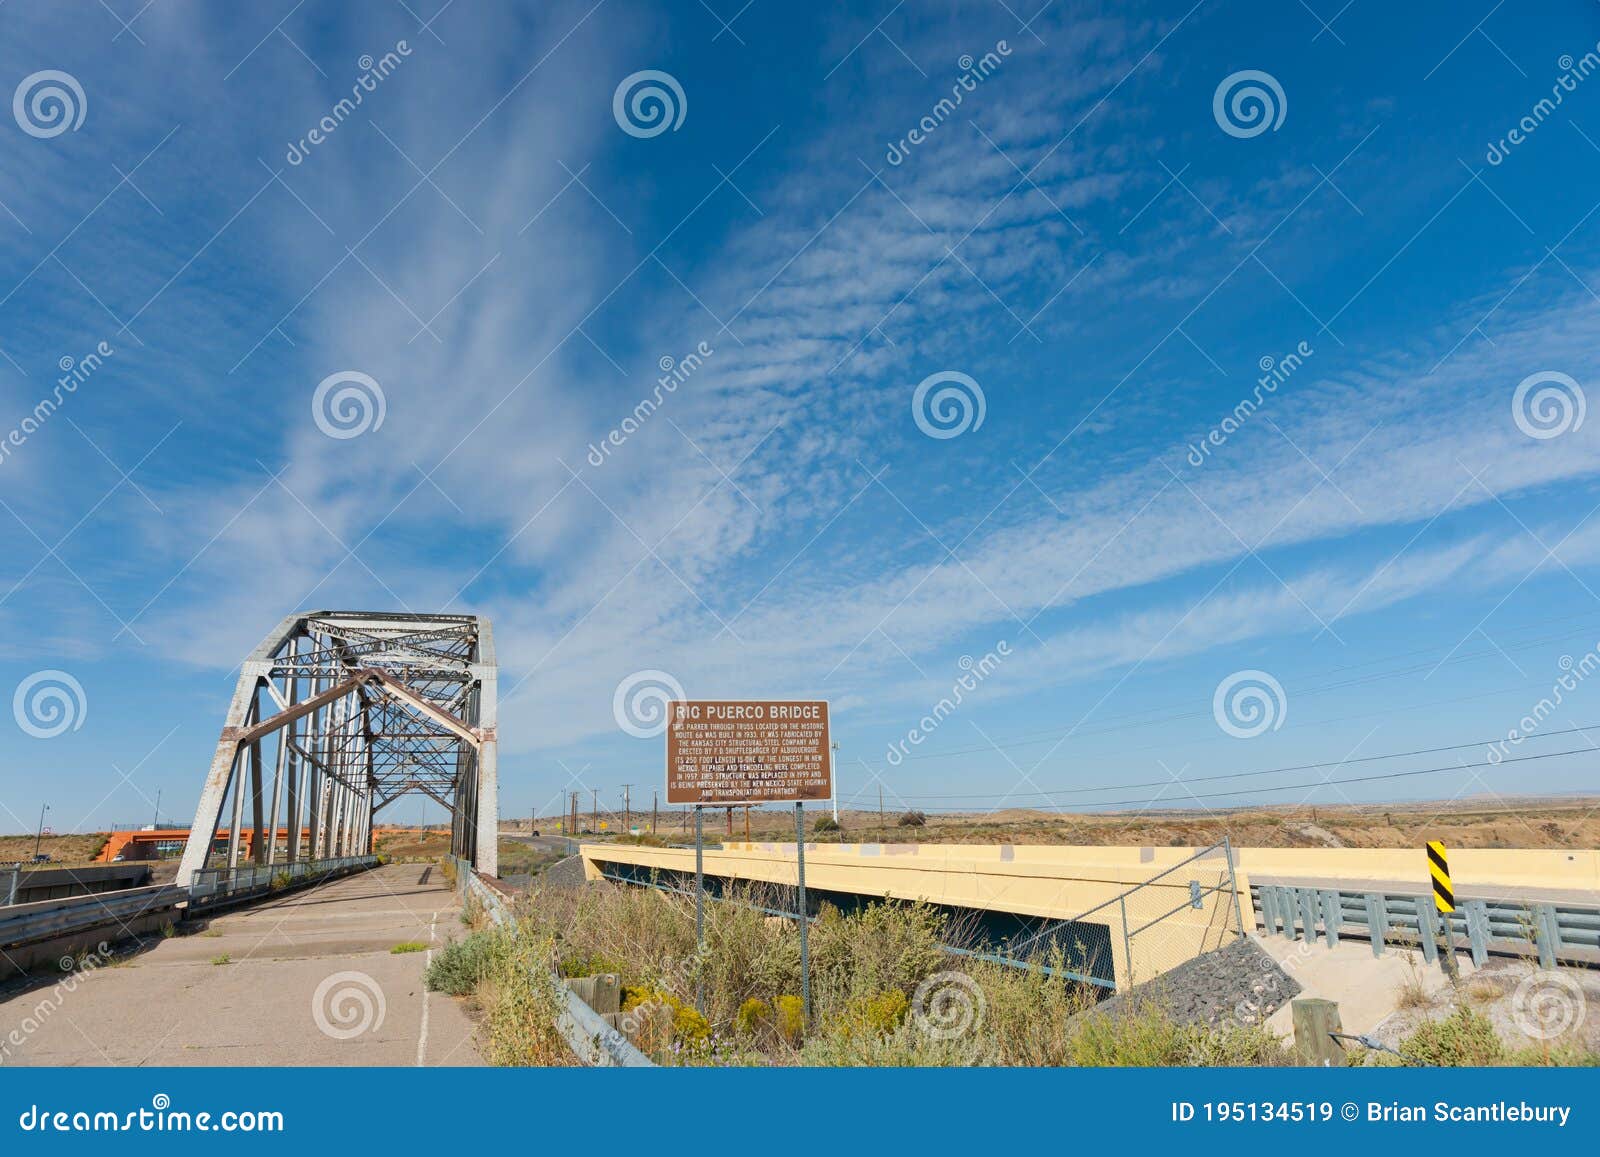 rio puerco bridge bridge located on historic route 66 built in 1933, now closed, new mexico, usa